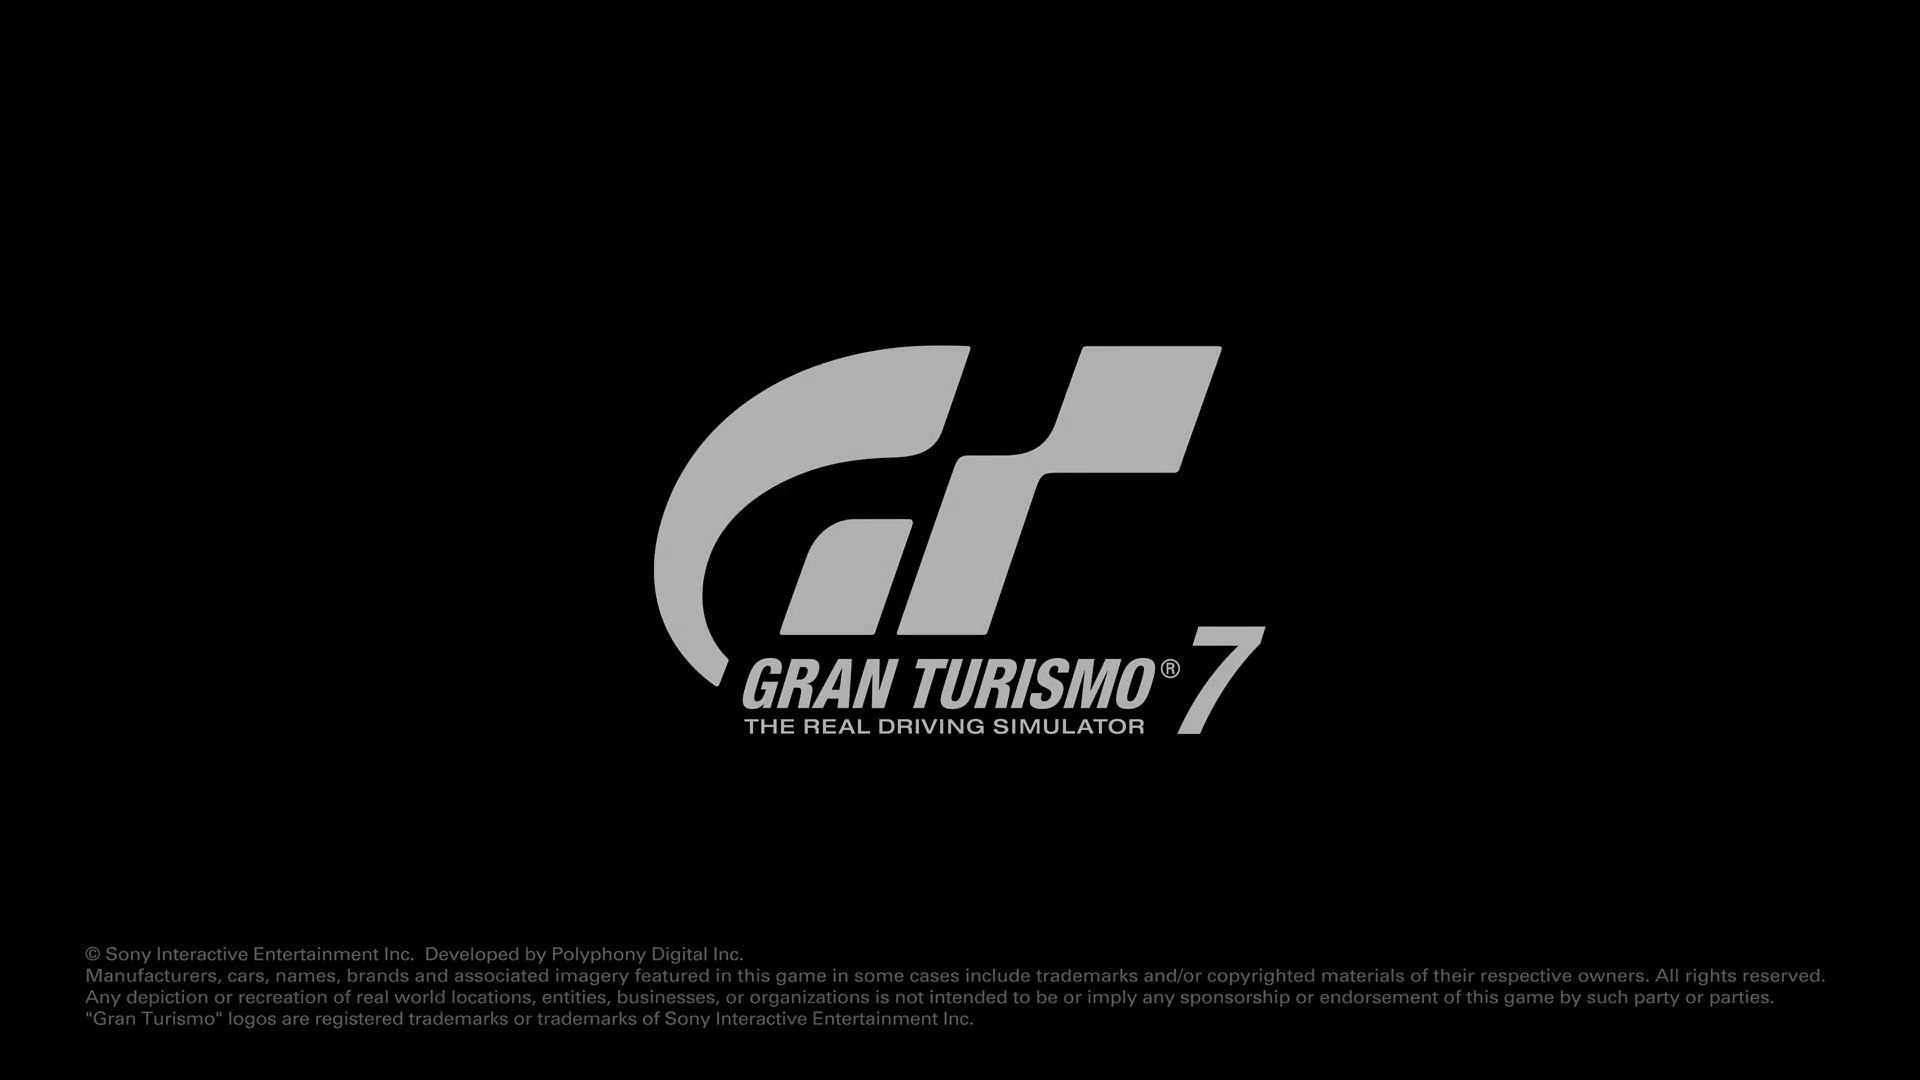 PS5 : Gran Turismo 7 trailer & gameplay